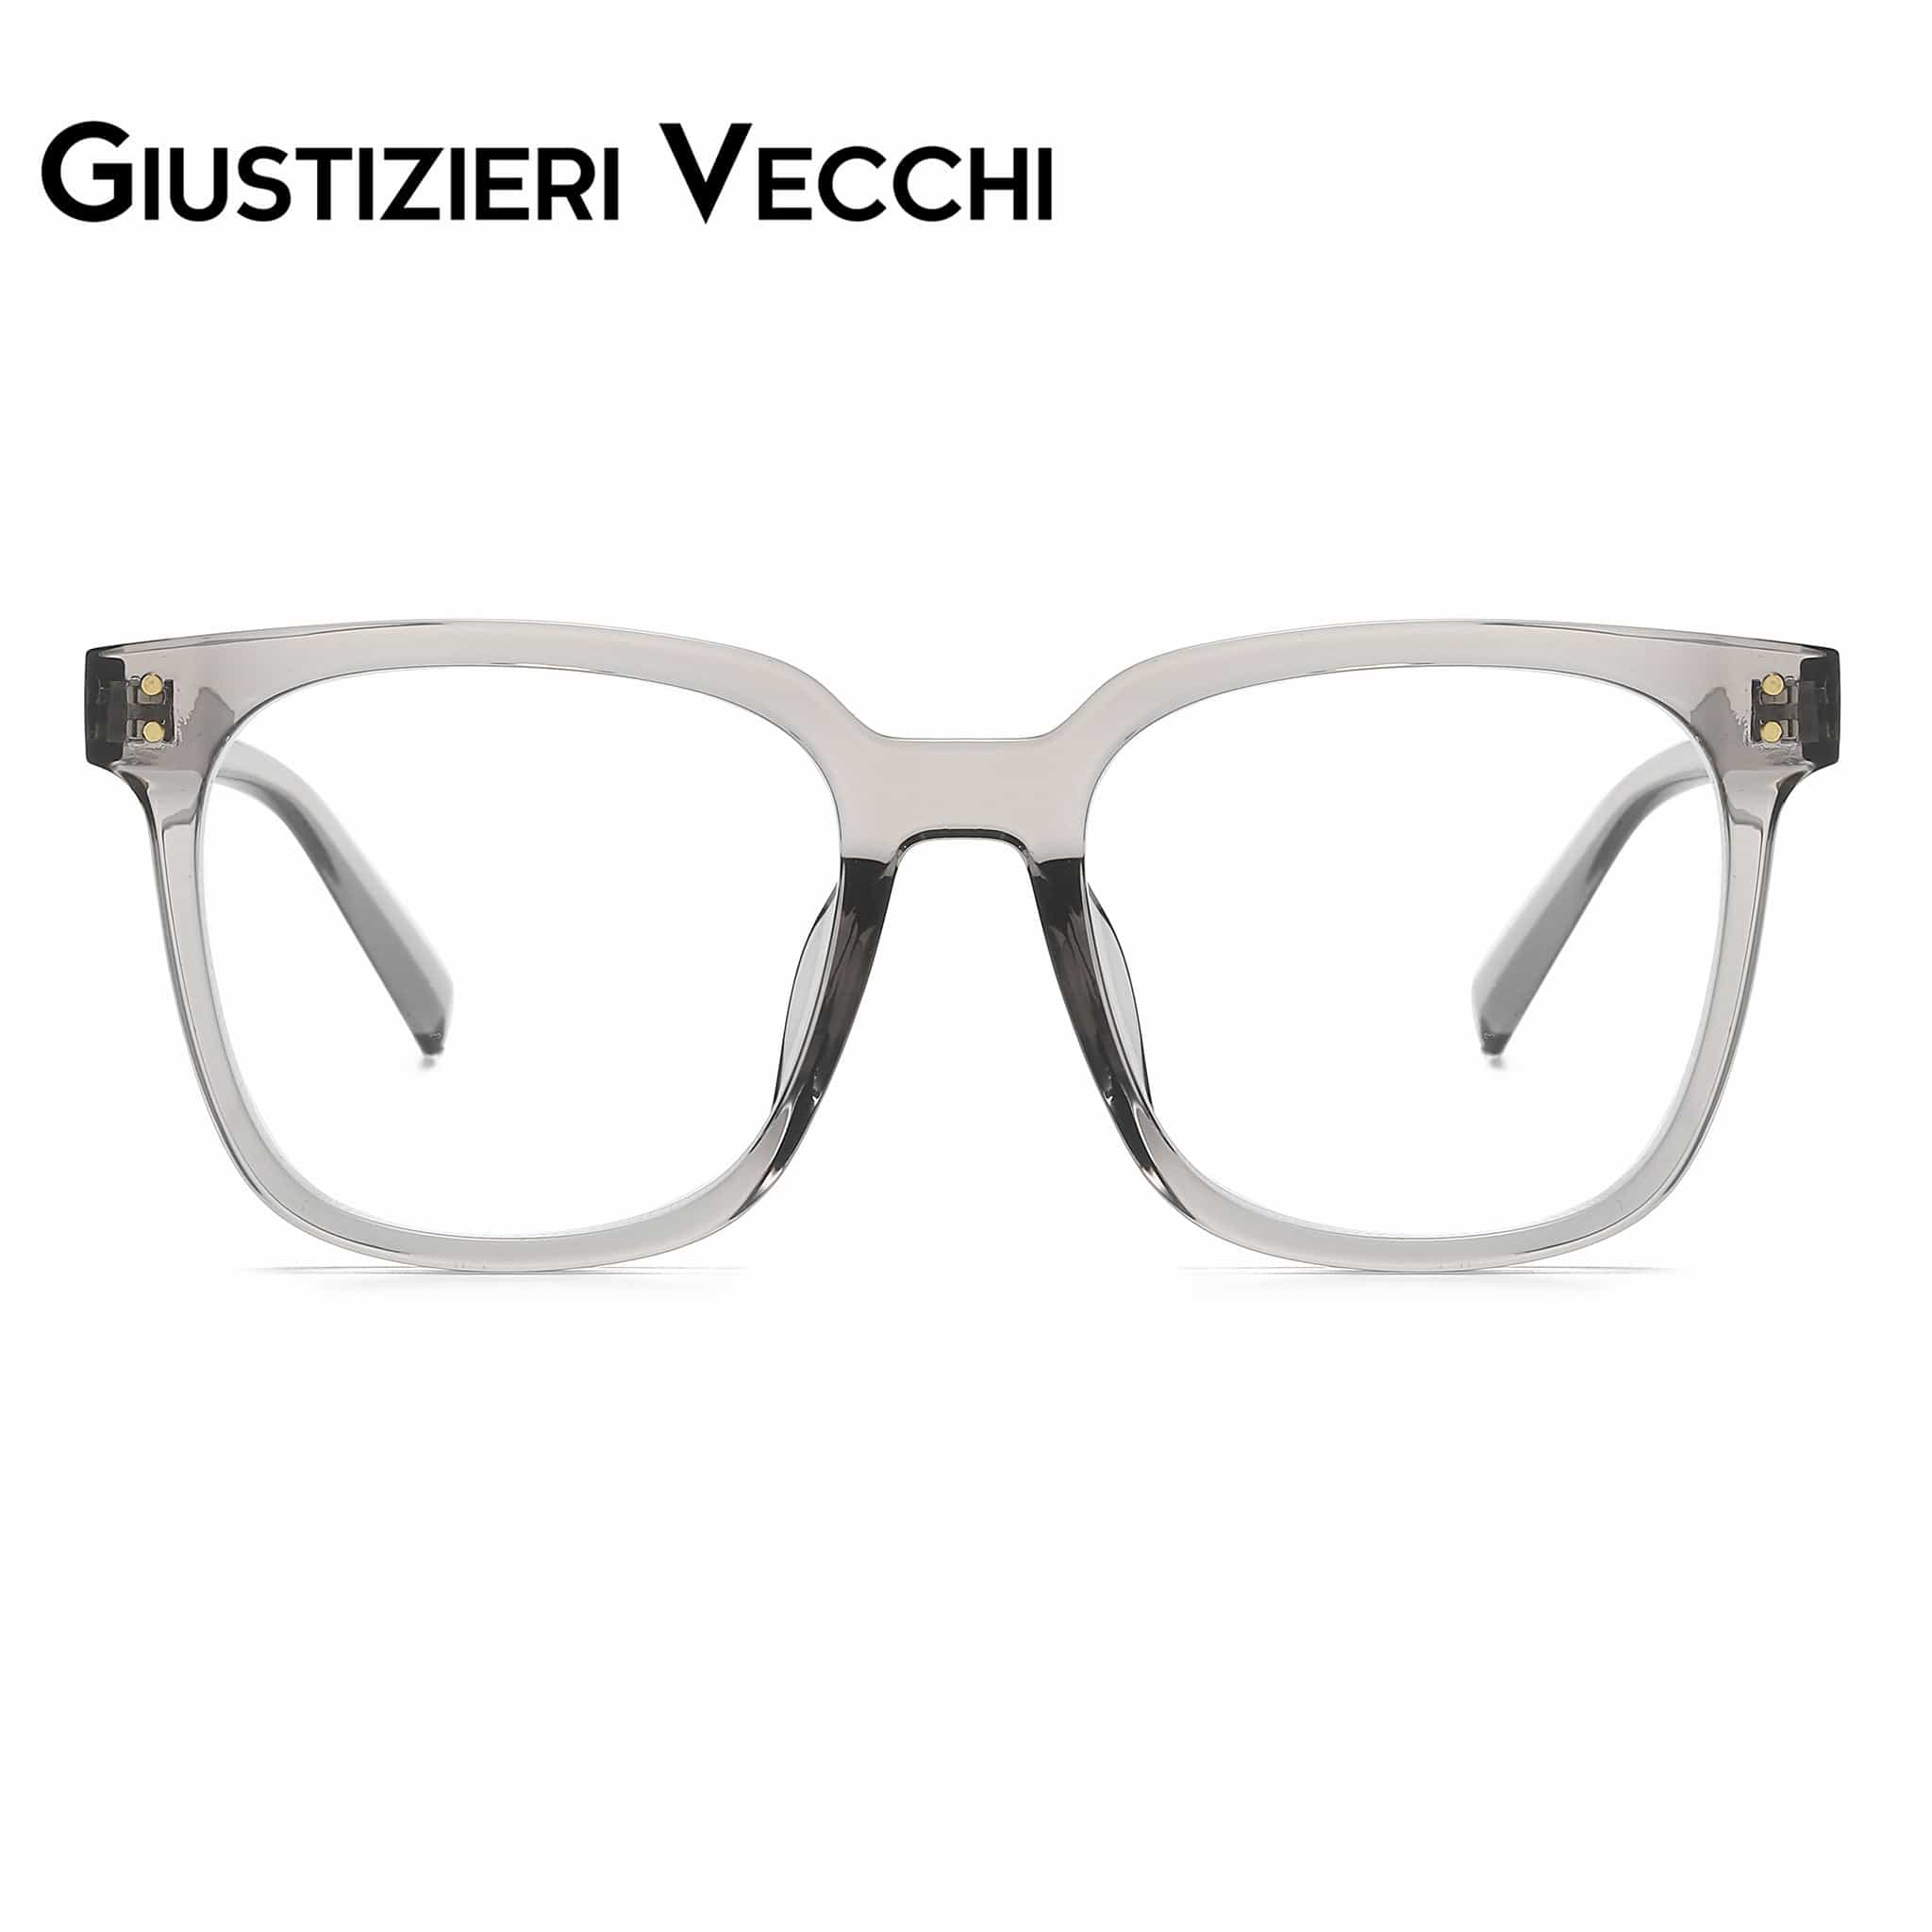 GIUSTIZIERI VECCHI Eyeglasses Medium / Sea Glass Grey Gioia Duo